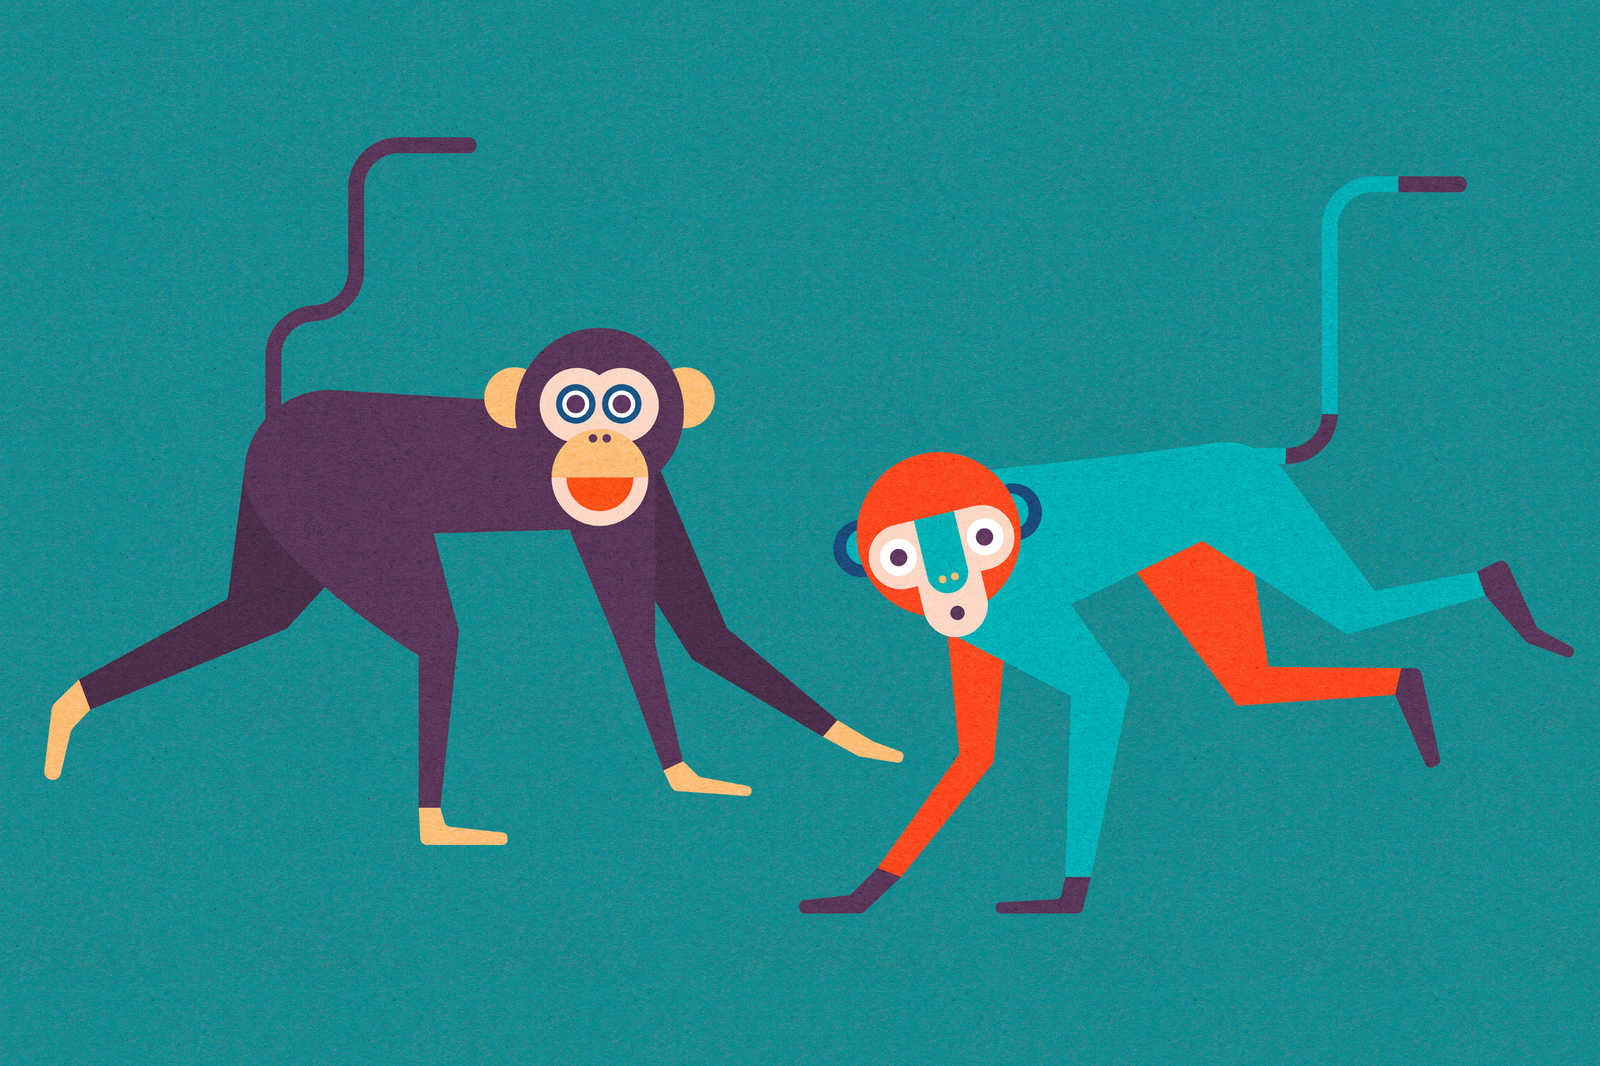             Monkey Business 1 - Leinwandbild in Pappe Struktur, Affen-Bande im Comic-Stil – 0,90 m x 0,60 m
        